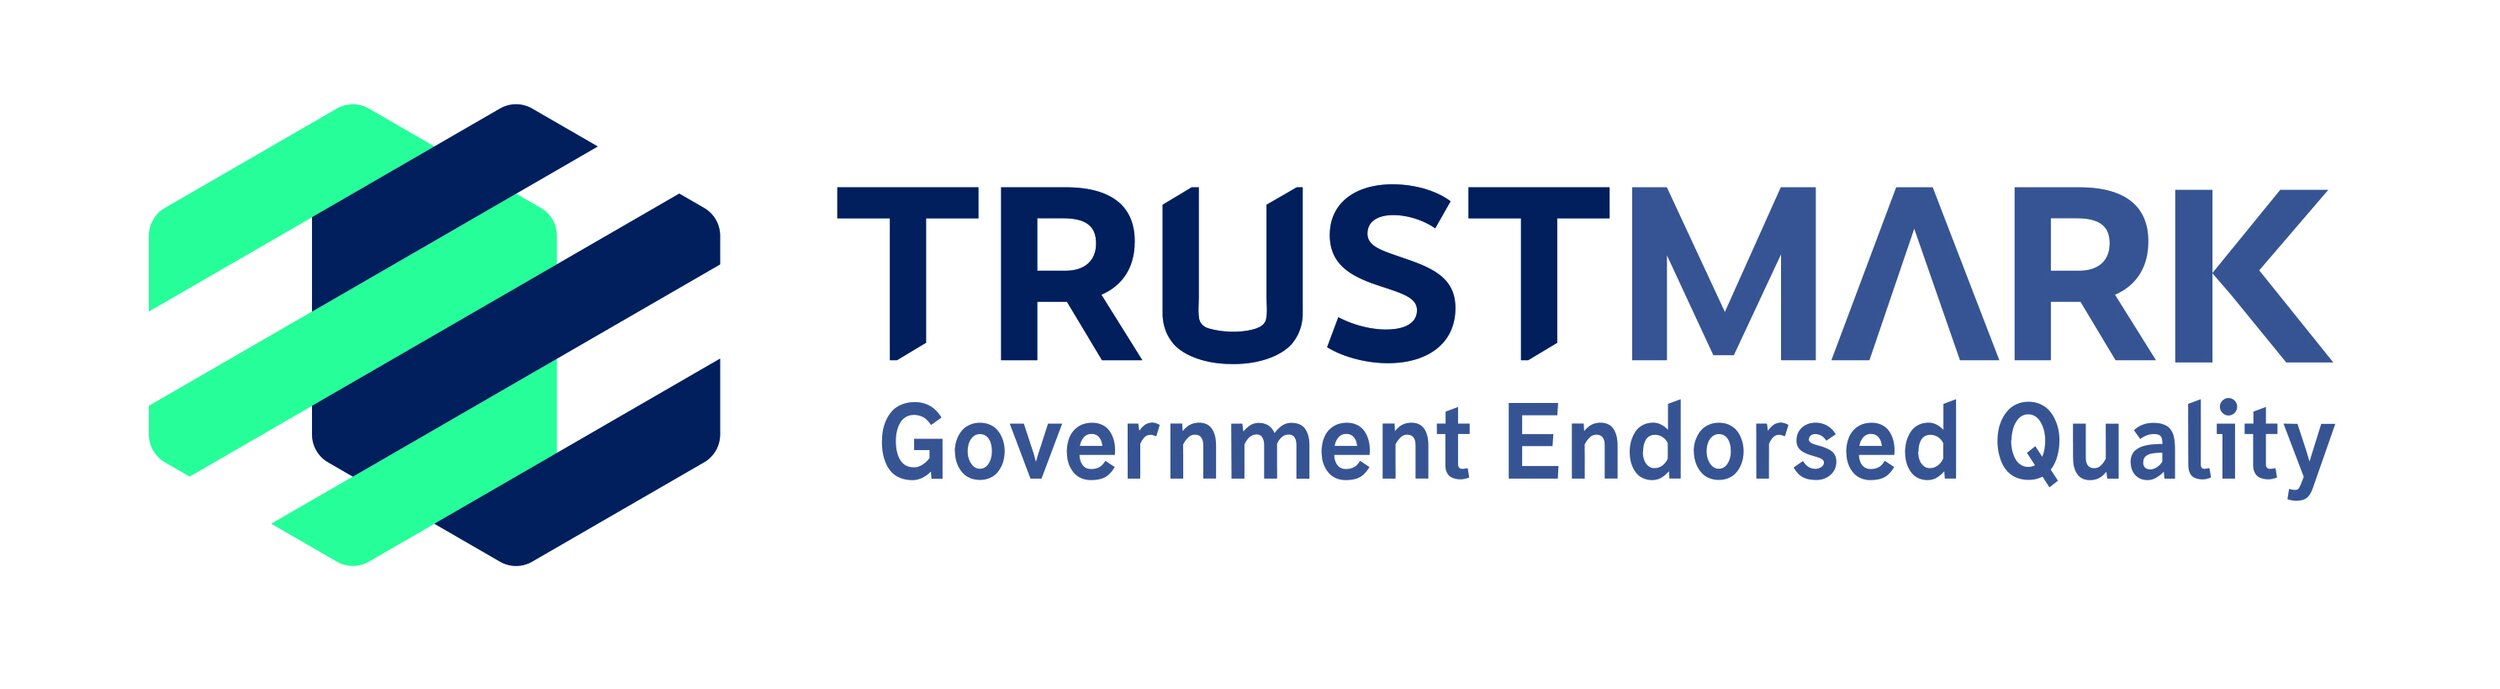 Trustmark Logo RGB.jpg